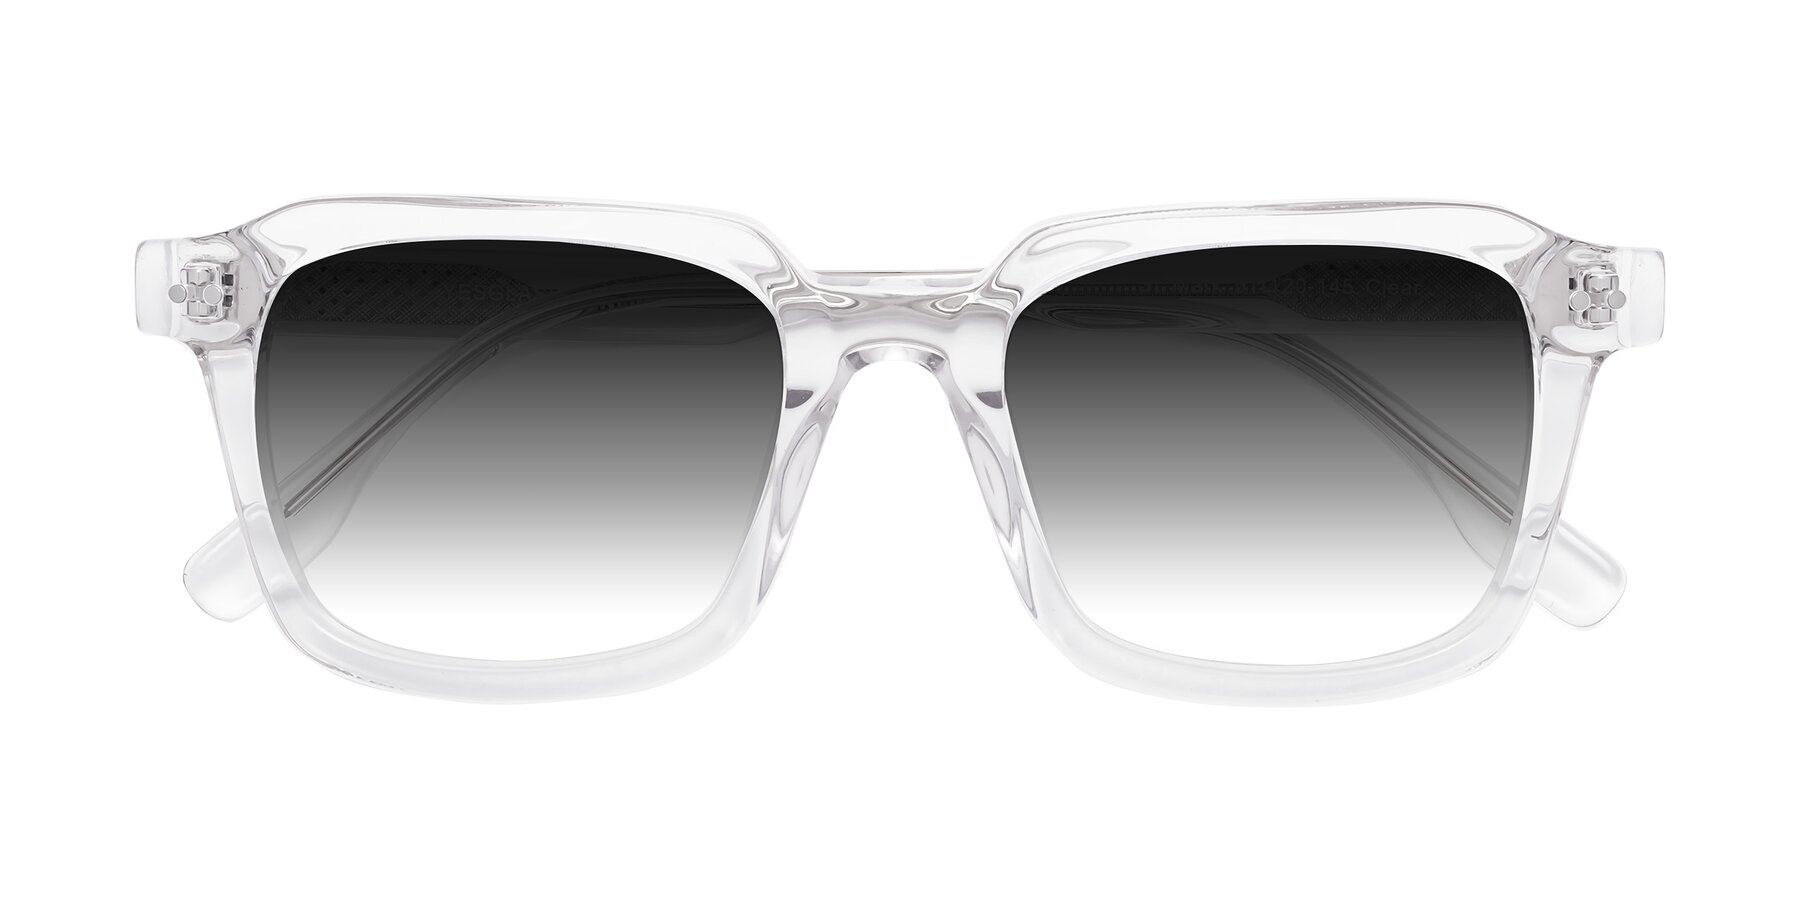 Bifocal Reading Glasses Gradient Gray Lens Sunglasses Anti Blue